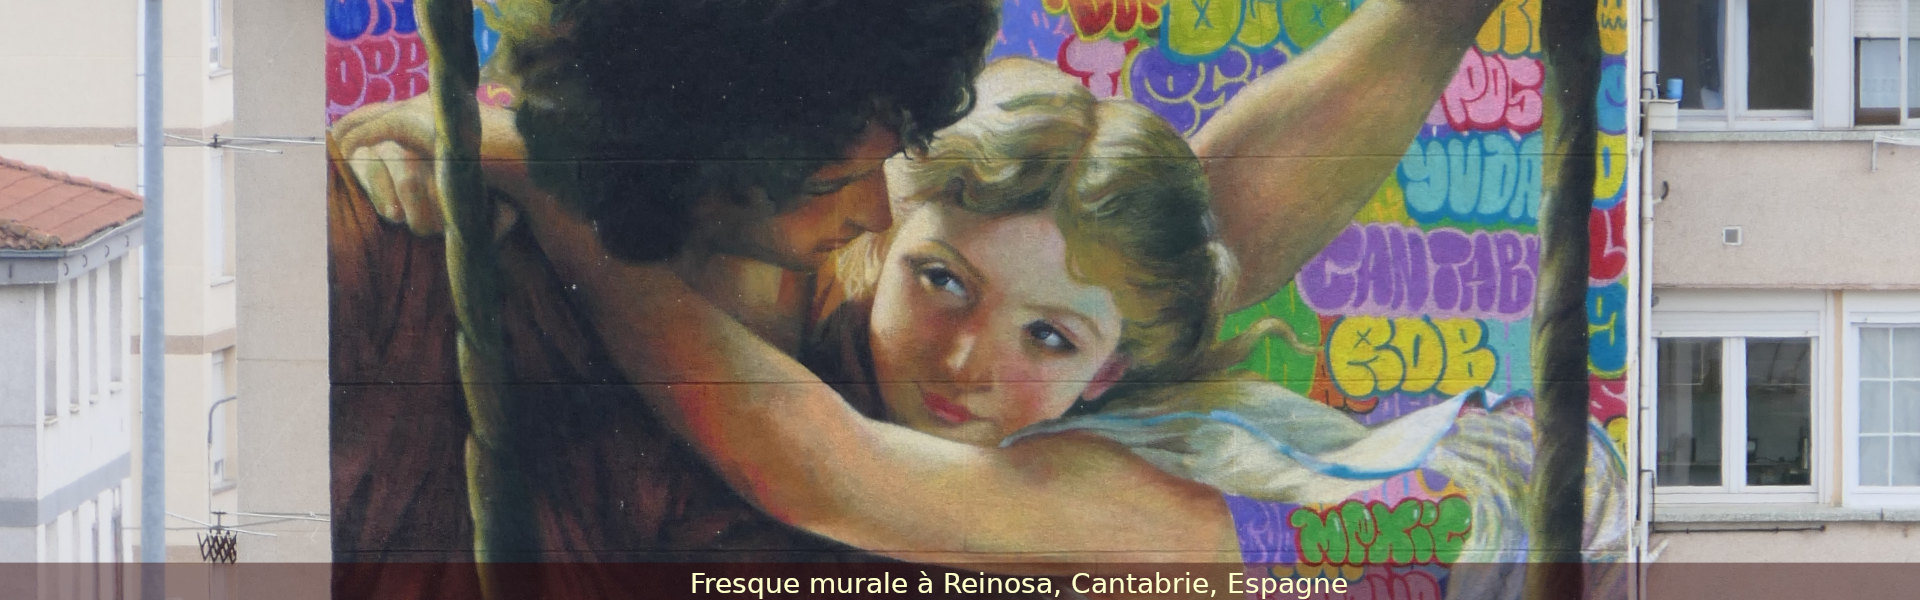 Fresque murale à Reinosa, Cantabrie, Espagne